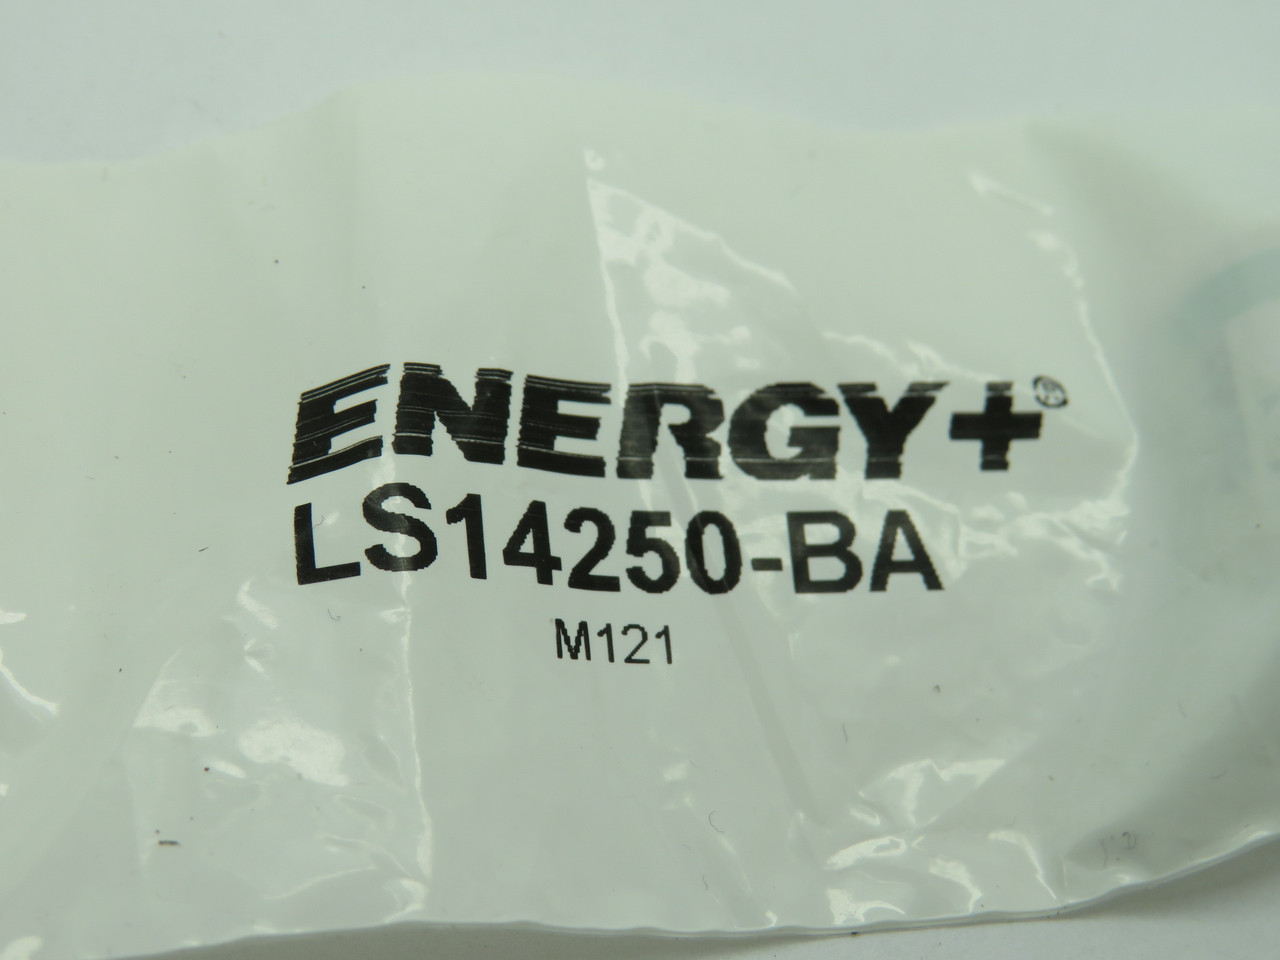 Energy Plus LS14250-BA Lithium Battery 3.6V Saft LS14250 NWB